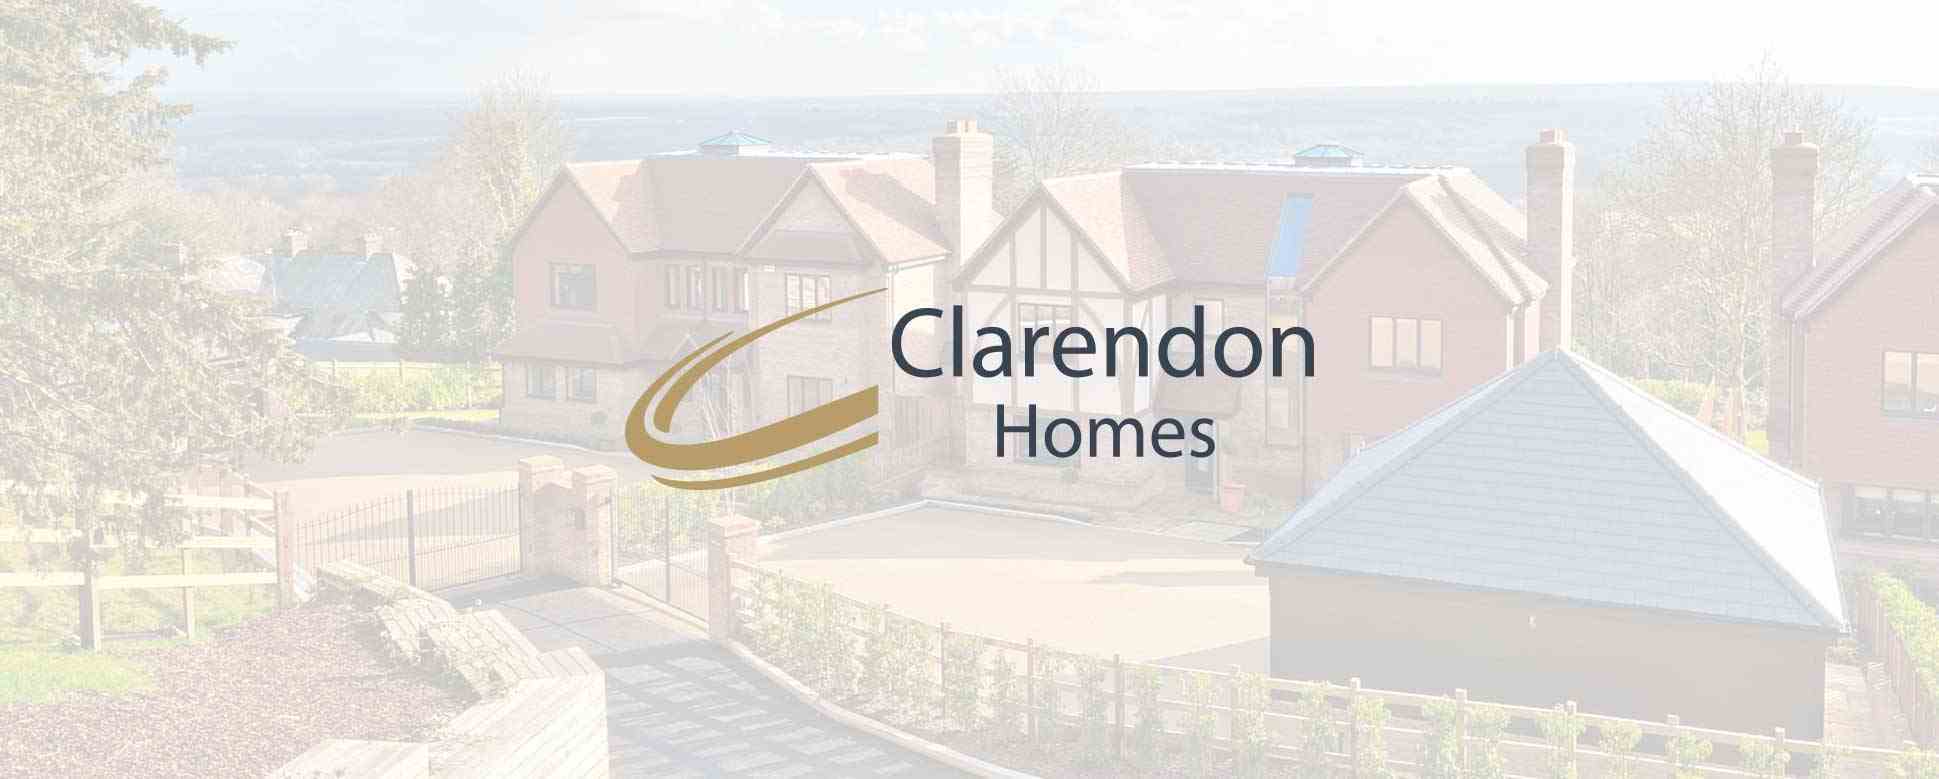 Meet the Developer – Clarendon Homes